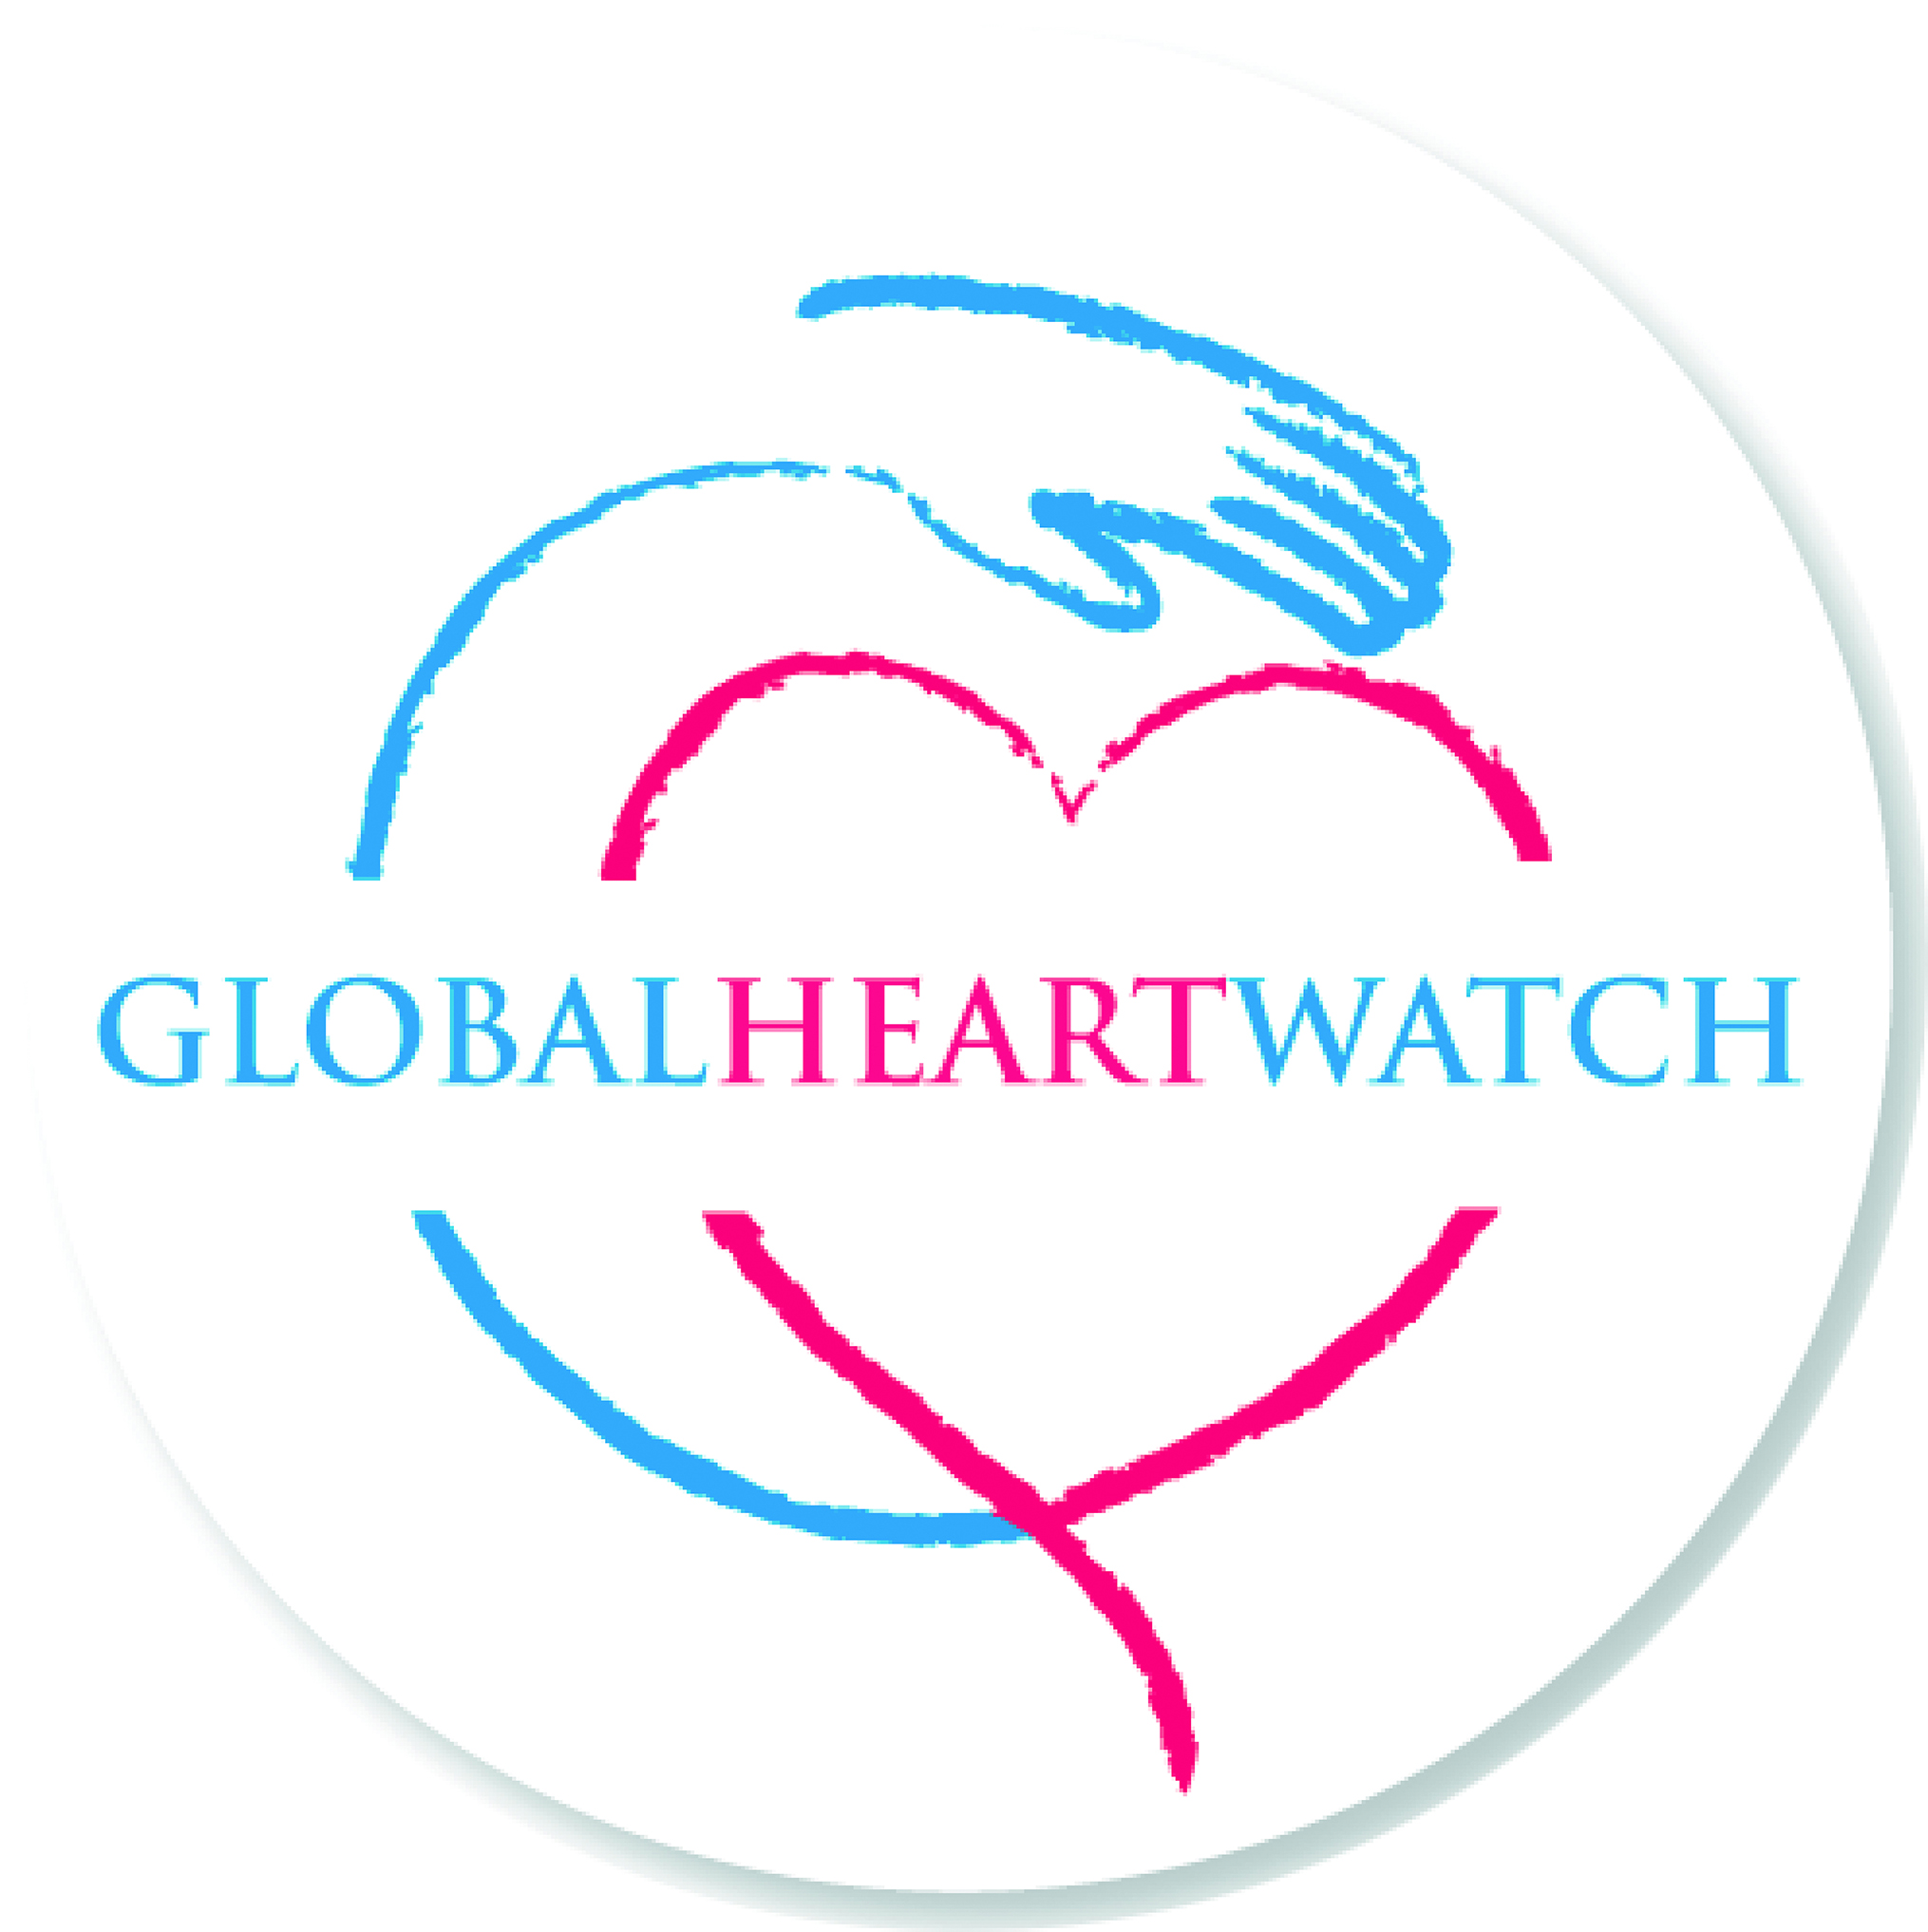 Association GLOBAL HEART WATCH n'a pas encore fourni de logo à FACILITIES